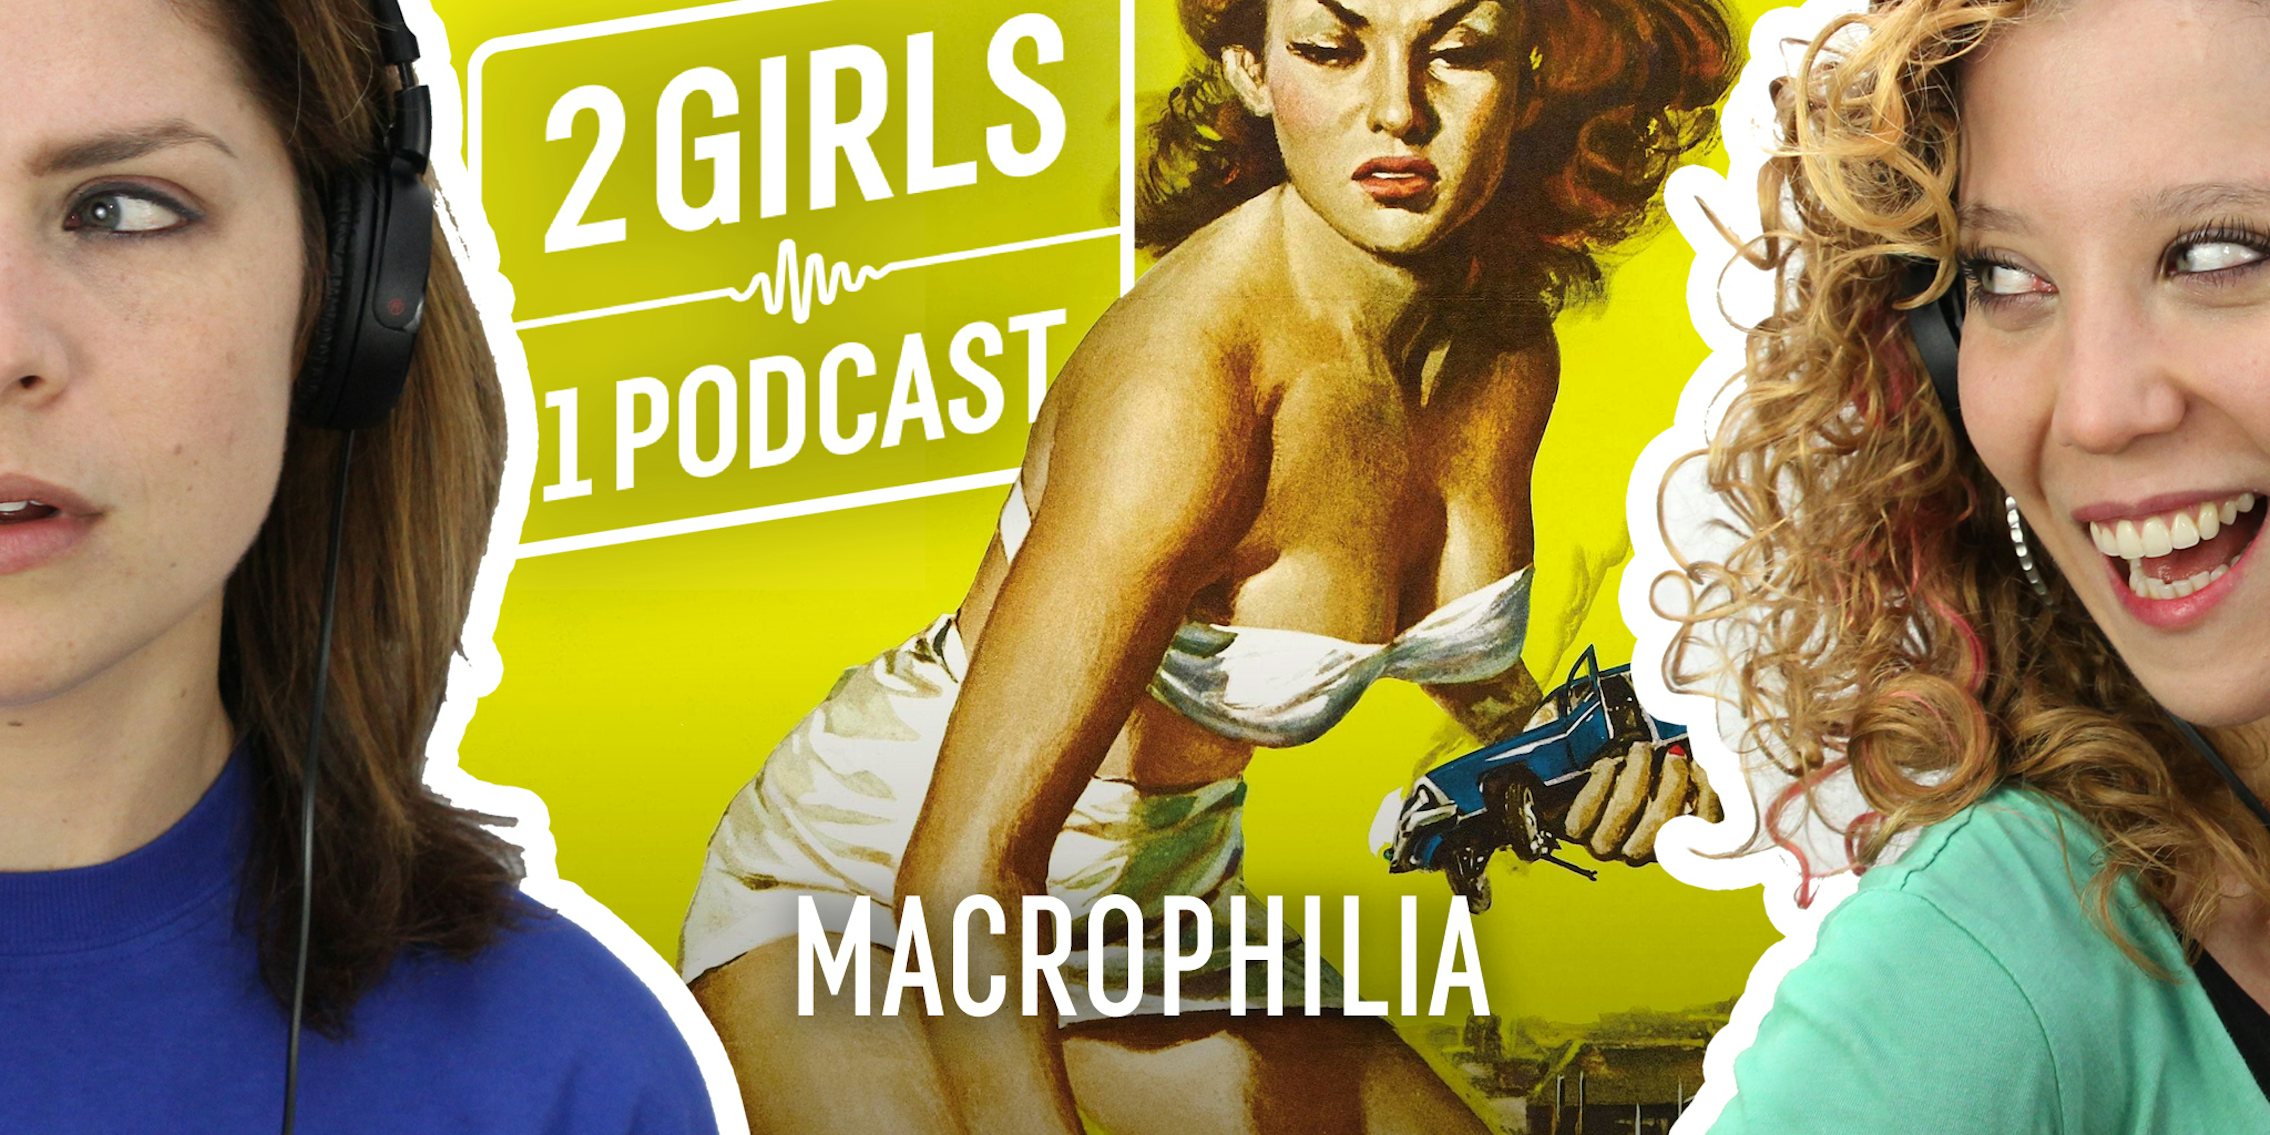 2 Girls 1 Podcast MACROPHILIA